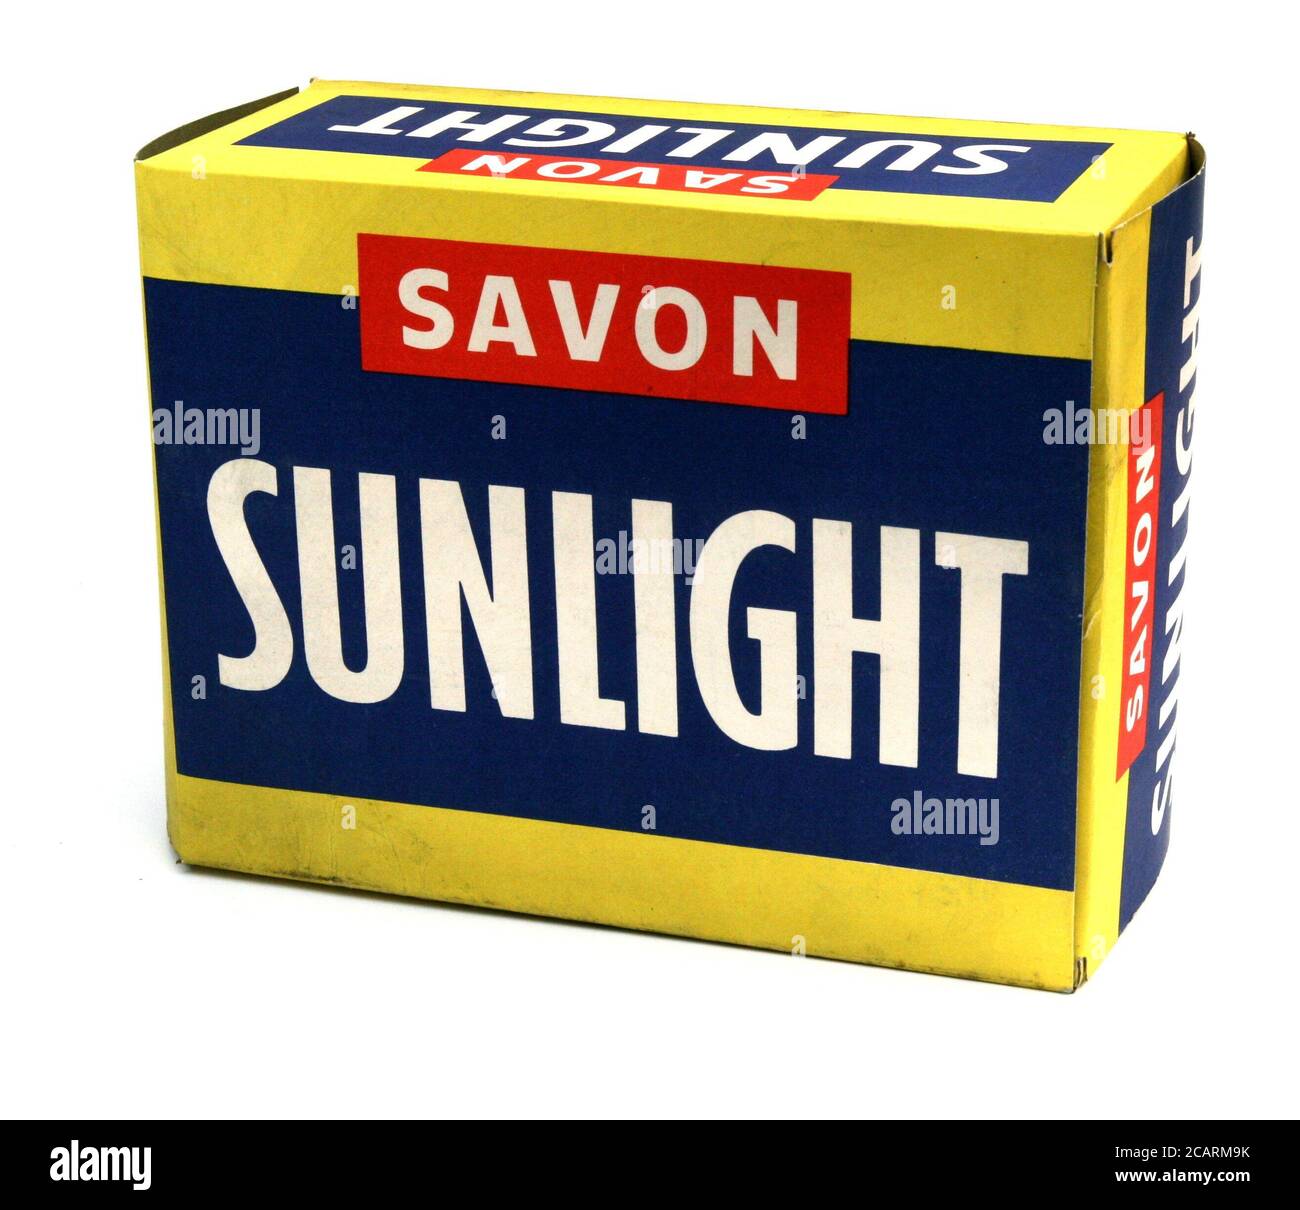 Paquet de Savon Sunlight vers 1960 Photo Stock - Alamy